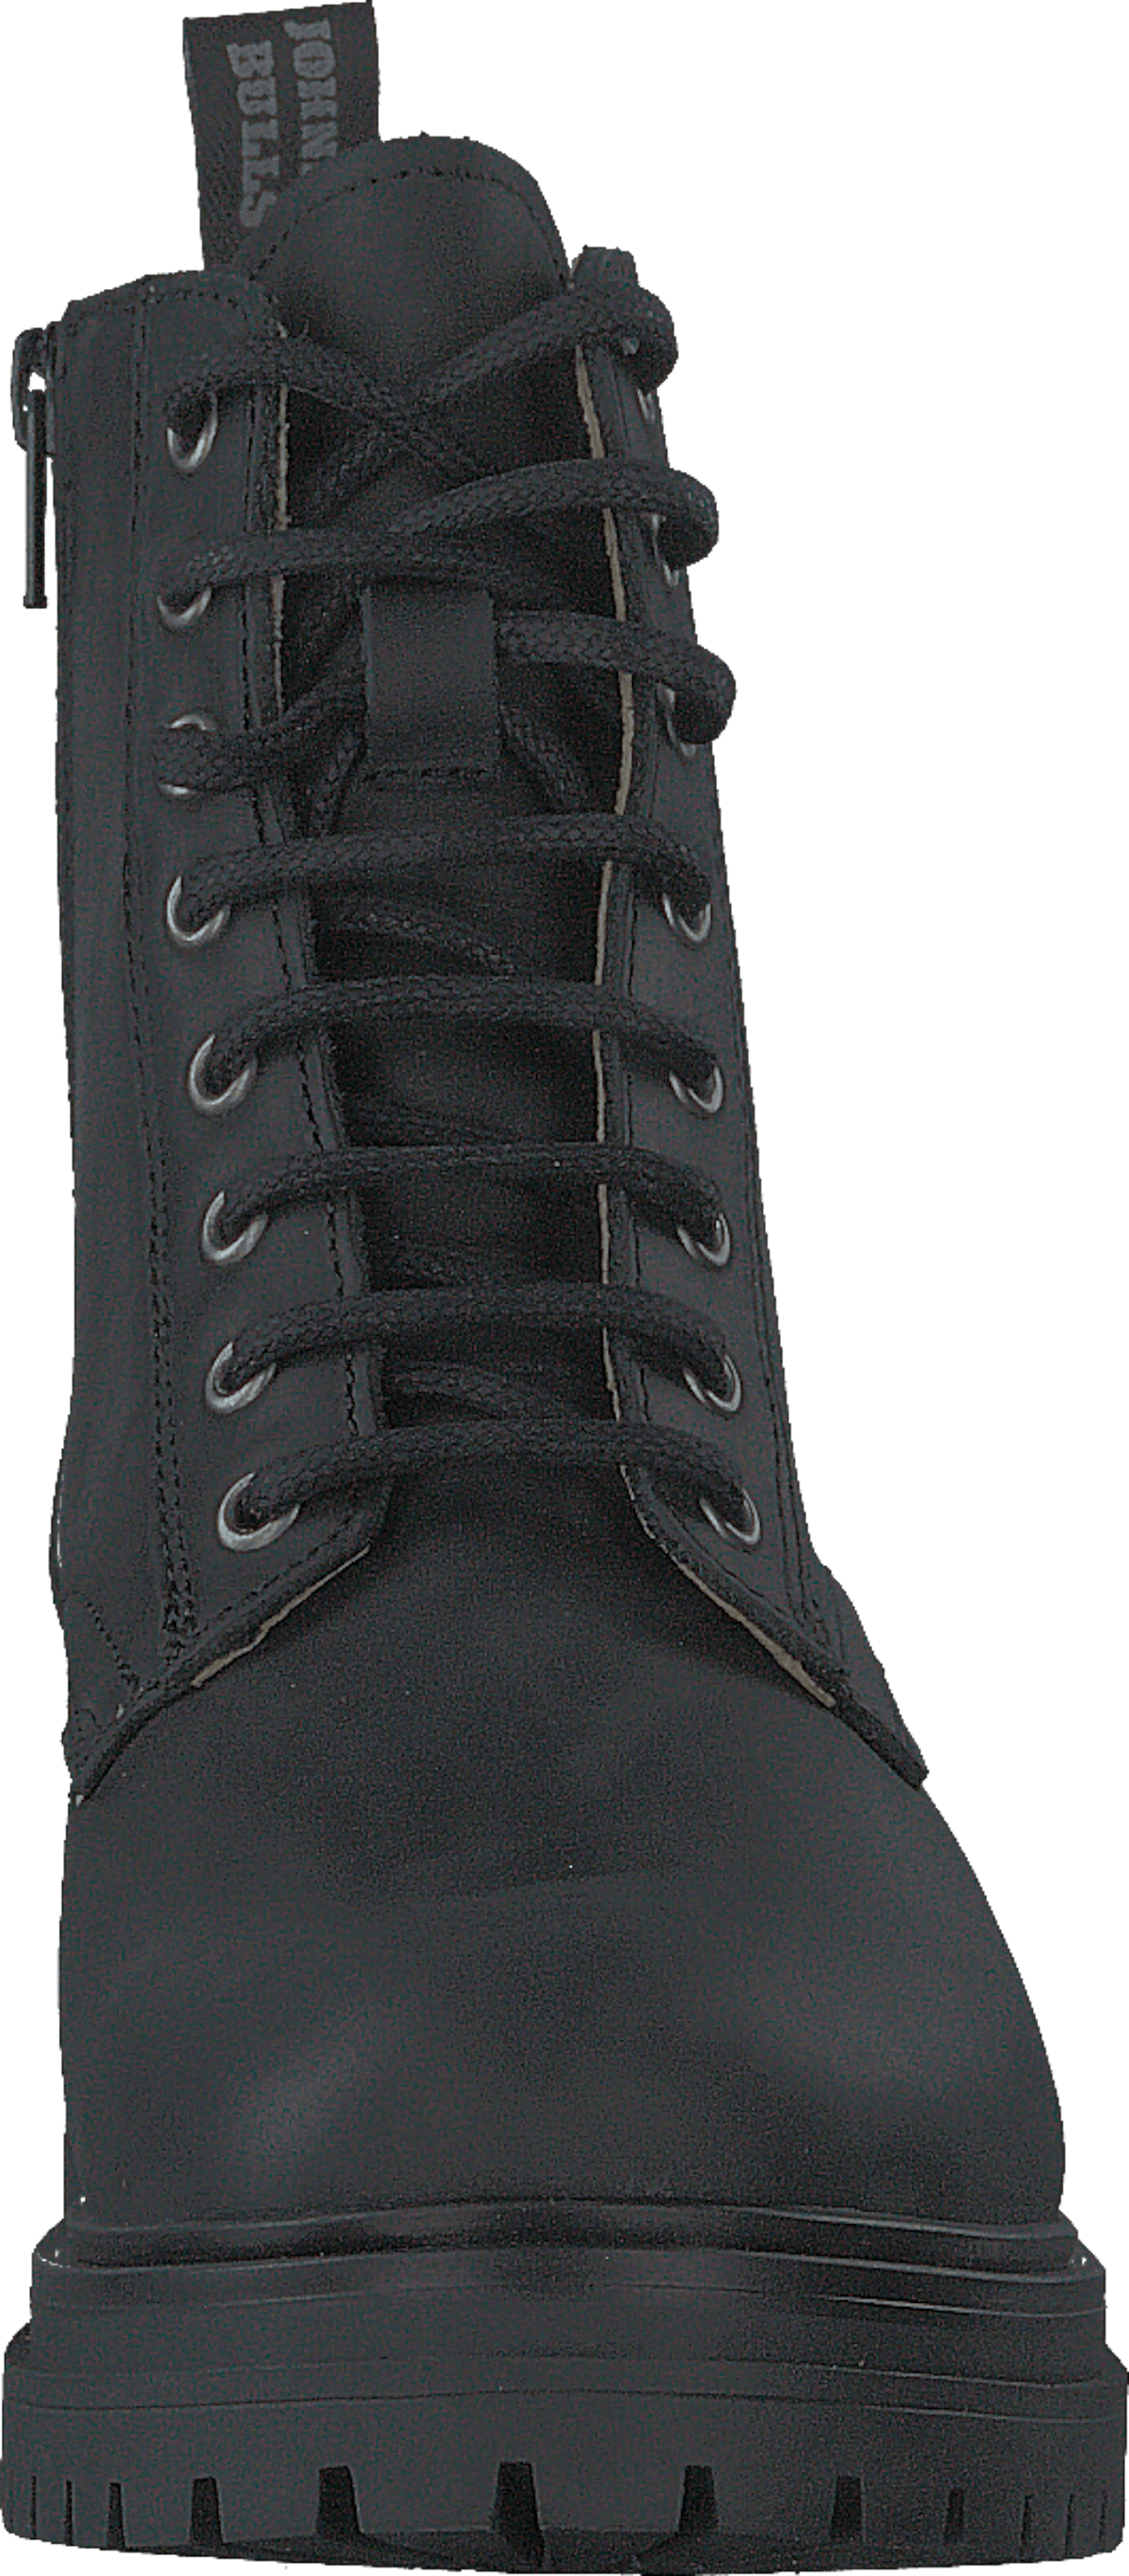 952 Sp Black - Oiled Leather Black